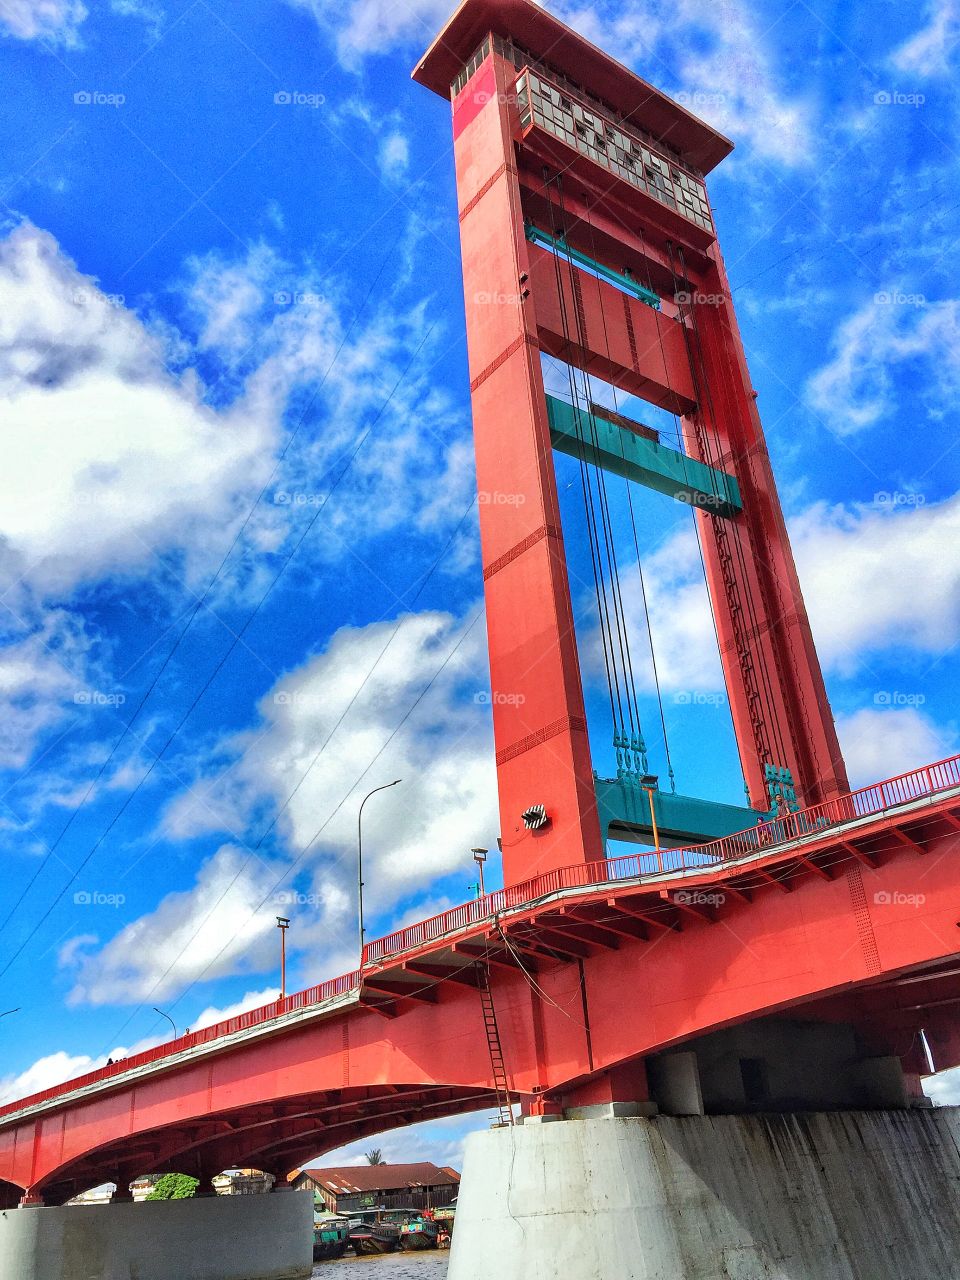 The Tower of Ampera Bridge capture from Musi River at South Sumatera